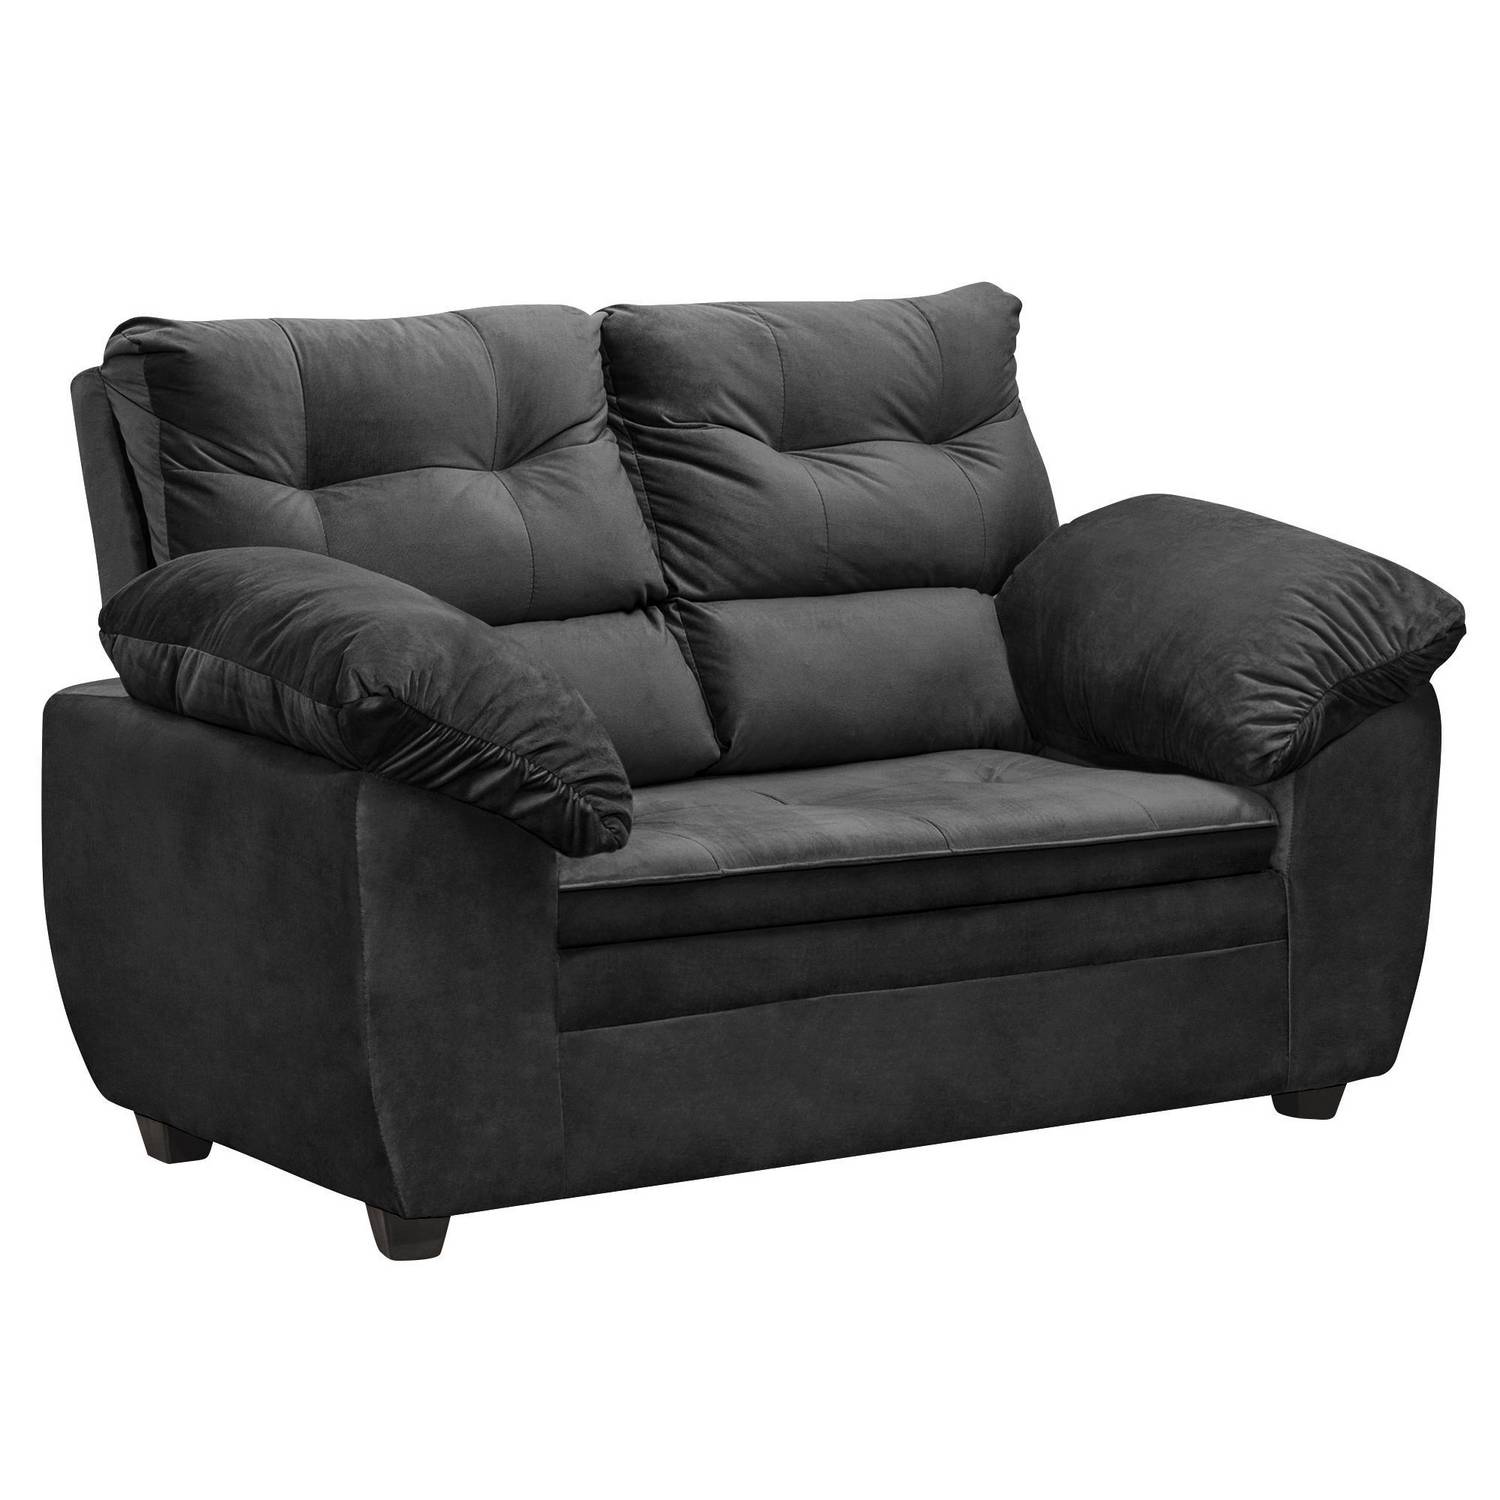 Sofa Liverpool Negro 2 Cuerpos 160x95x85 Header